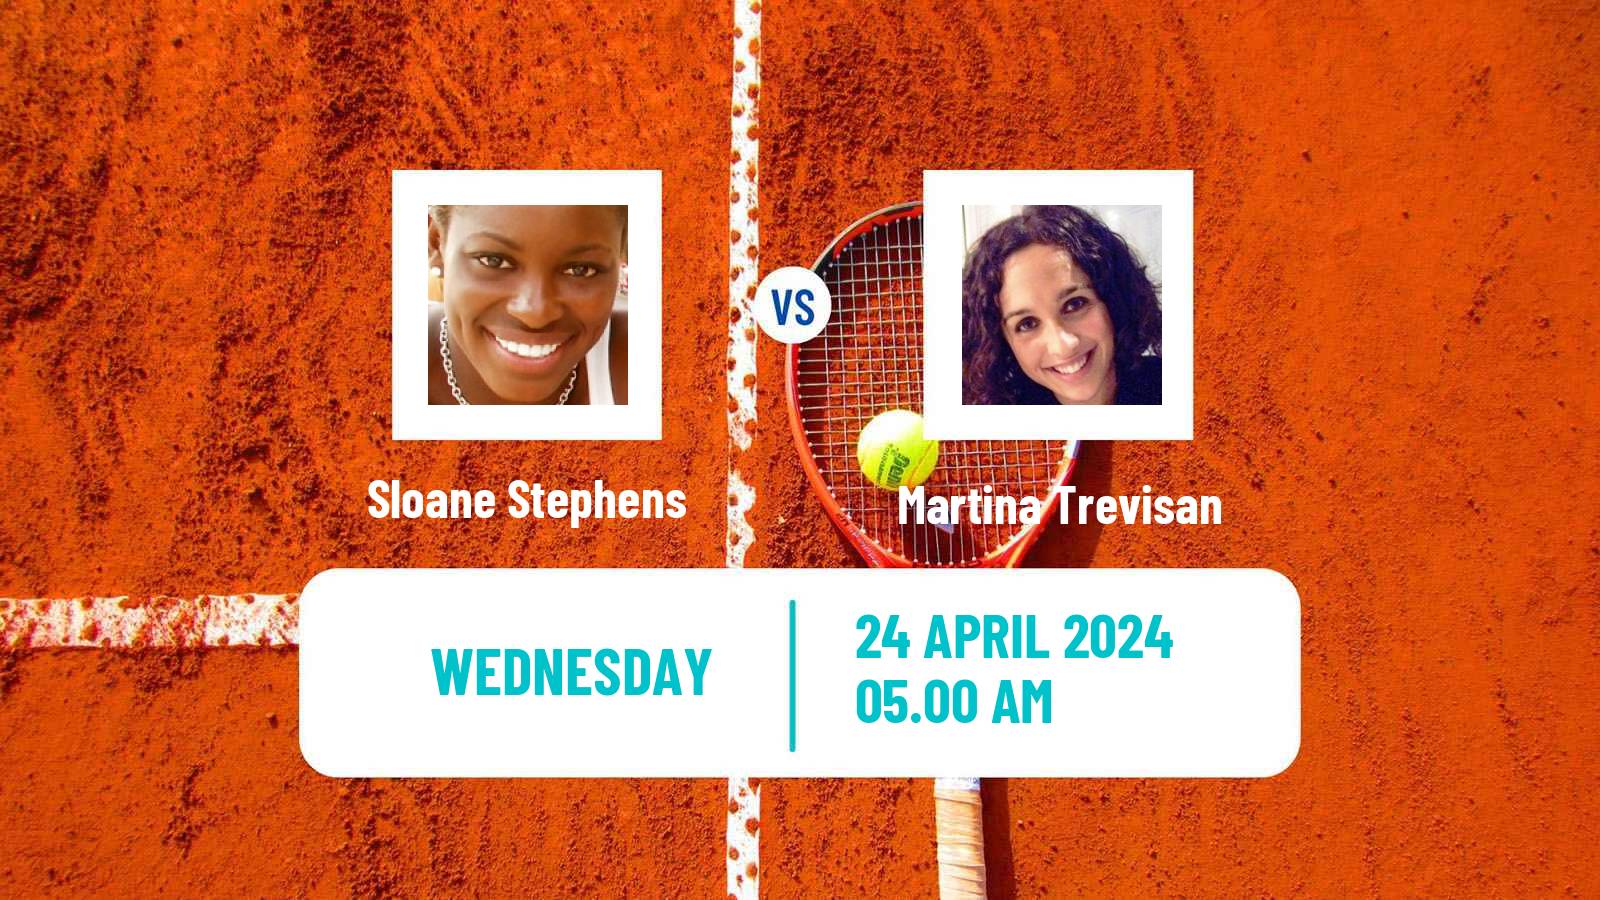 Tennis WTA Madrid Sloane Stephens - Martina Trevisan